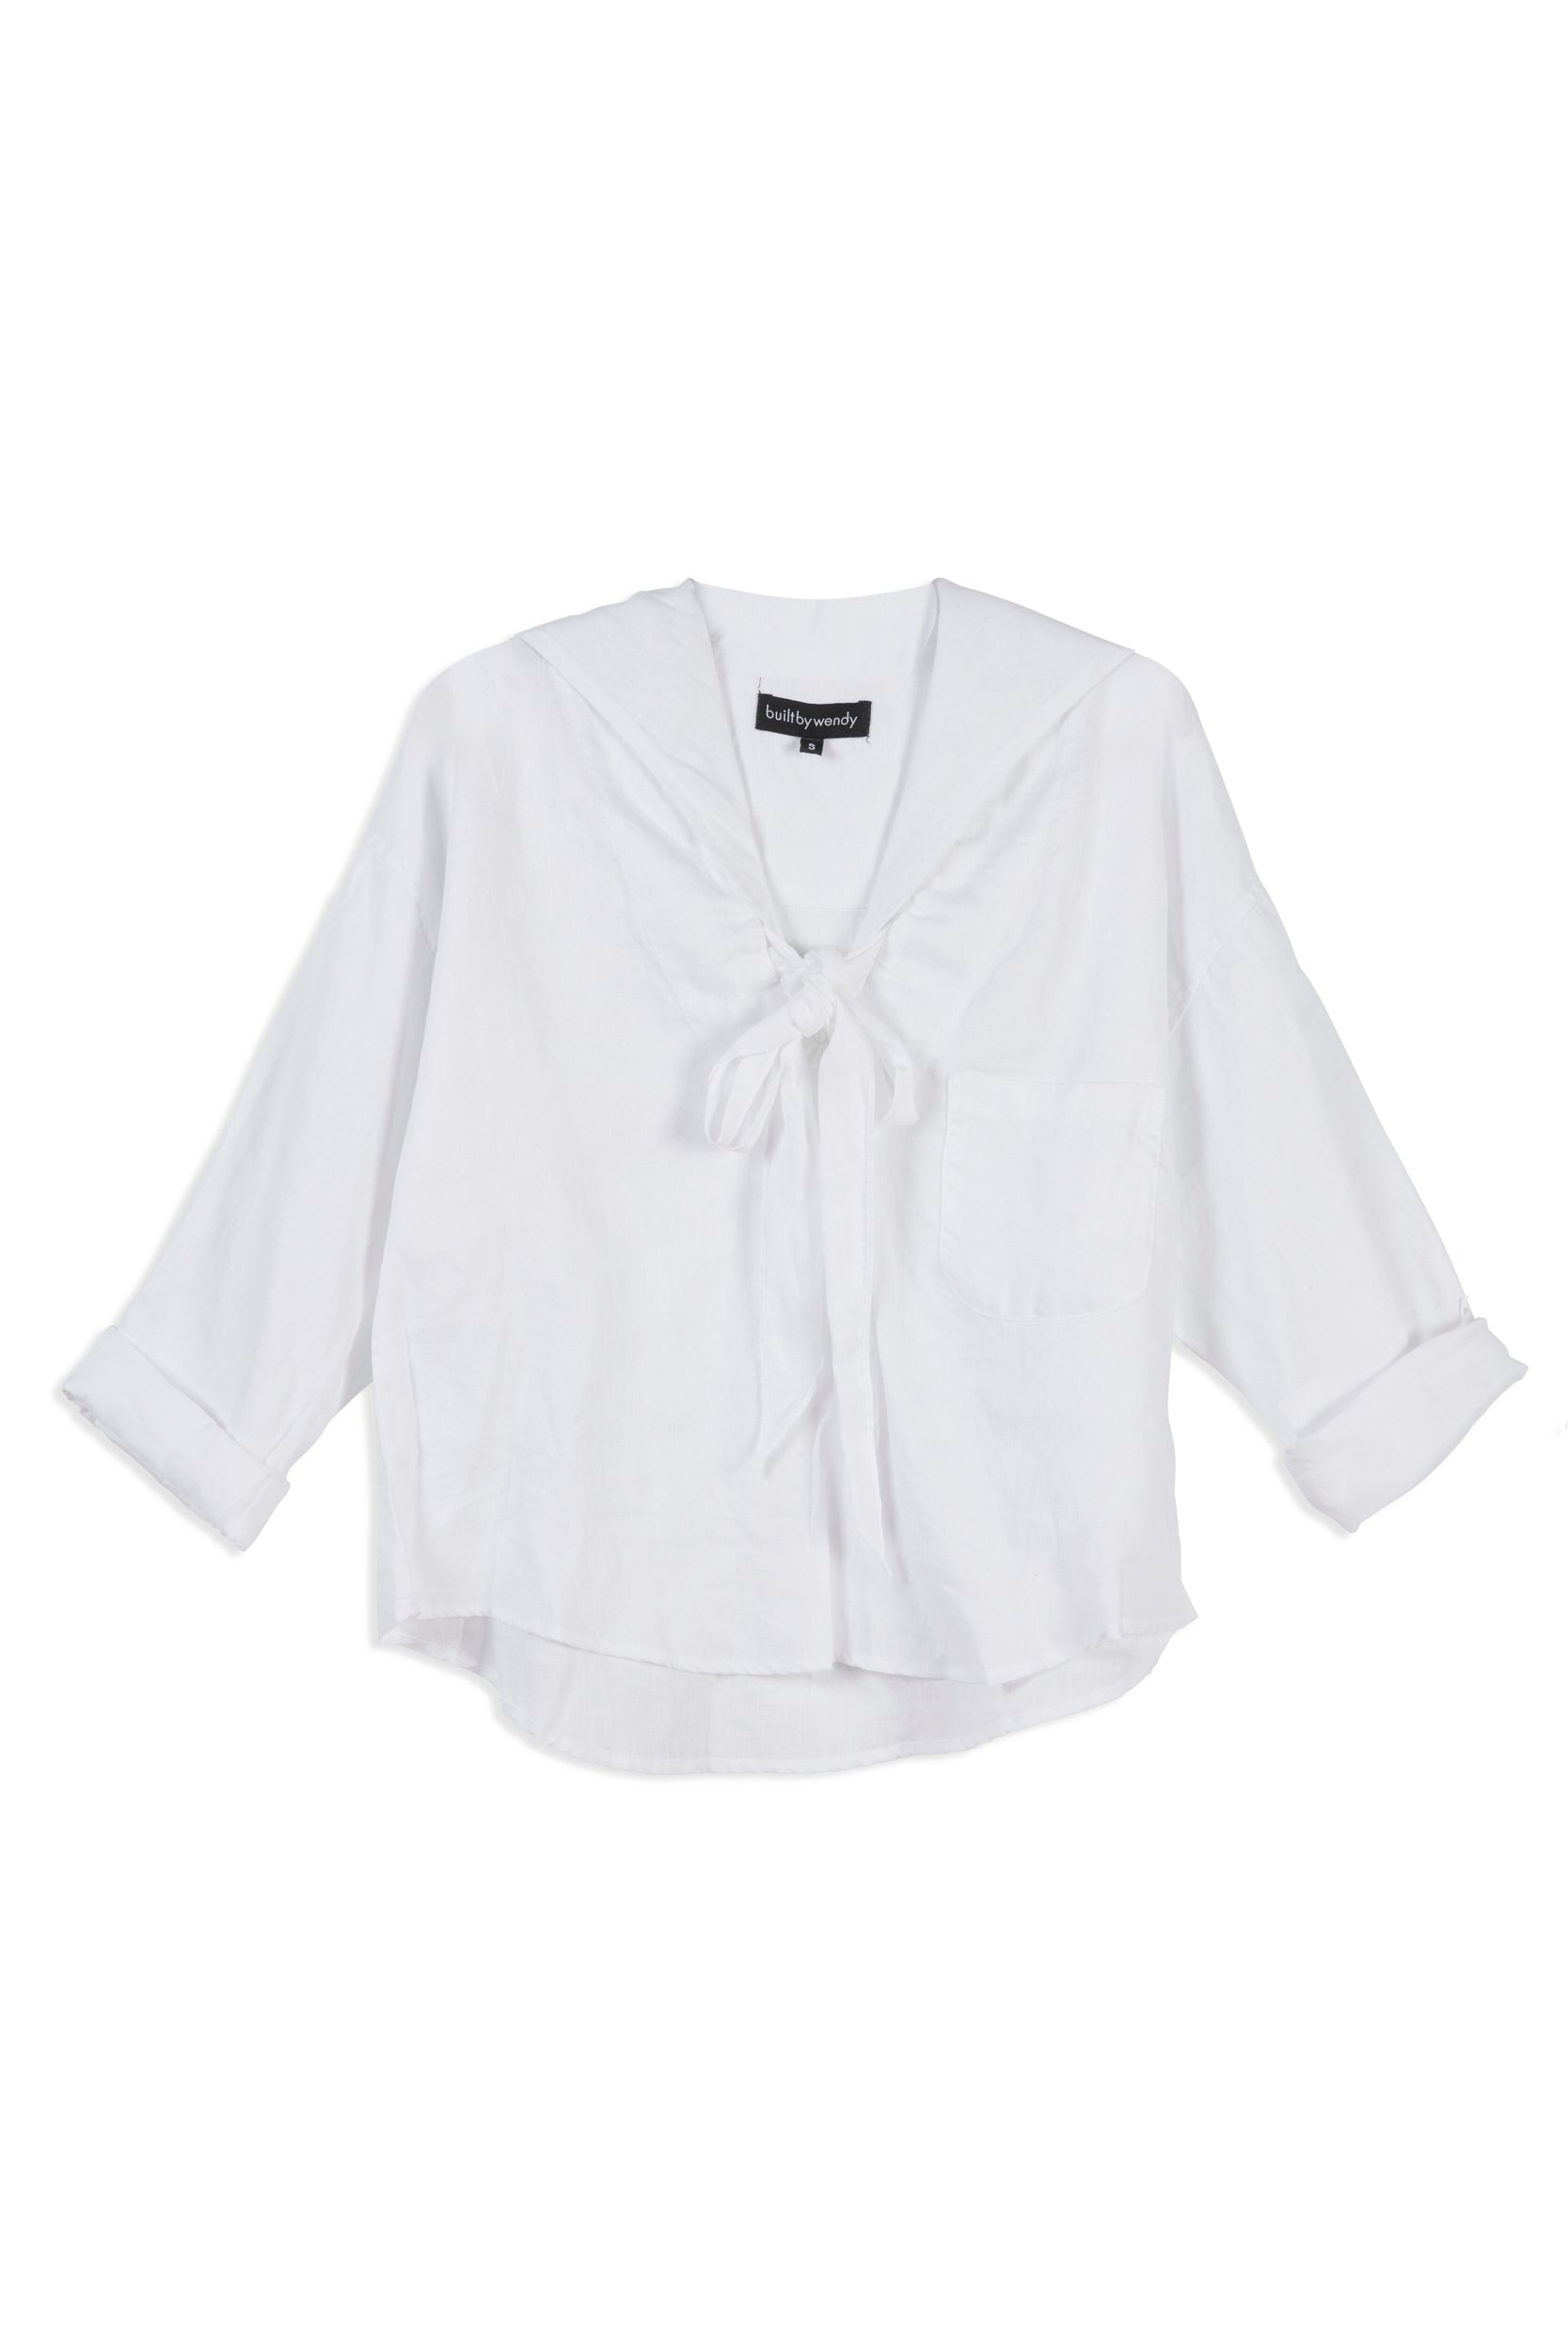 Sailor Shirt º White – Built by Wendy